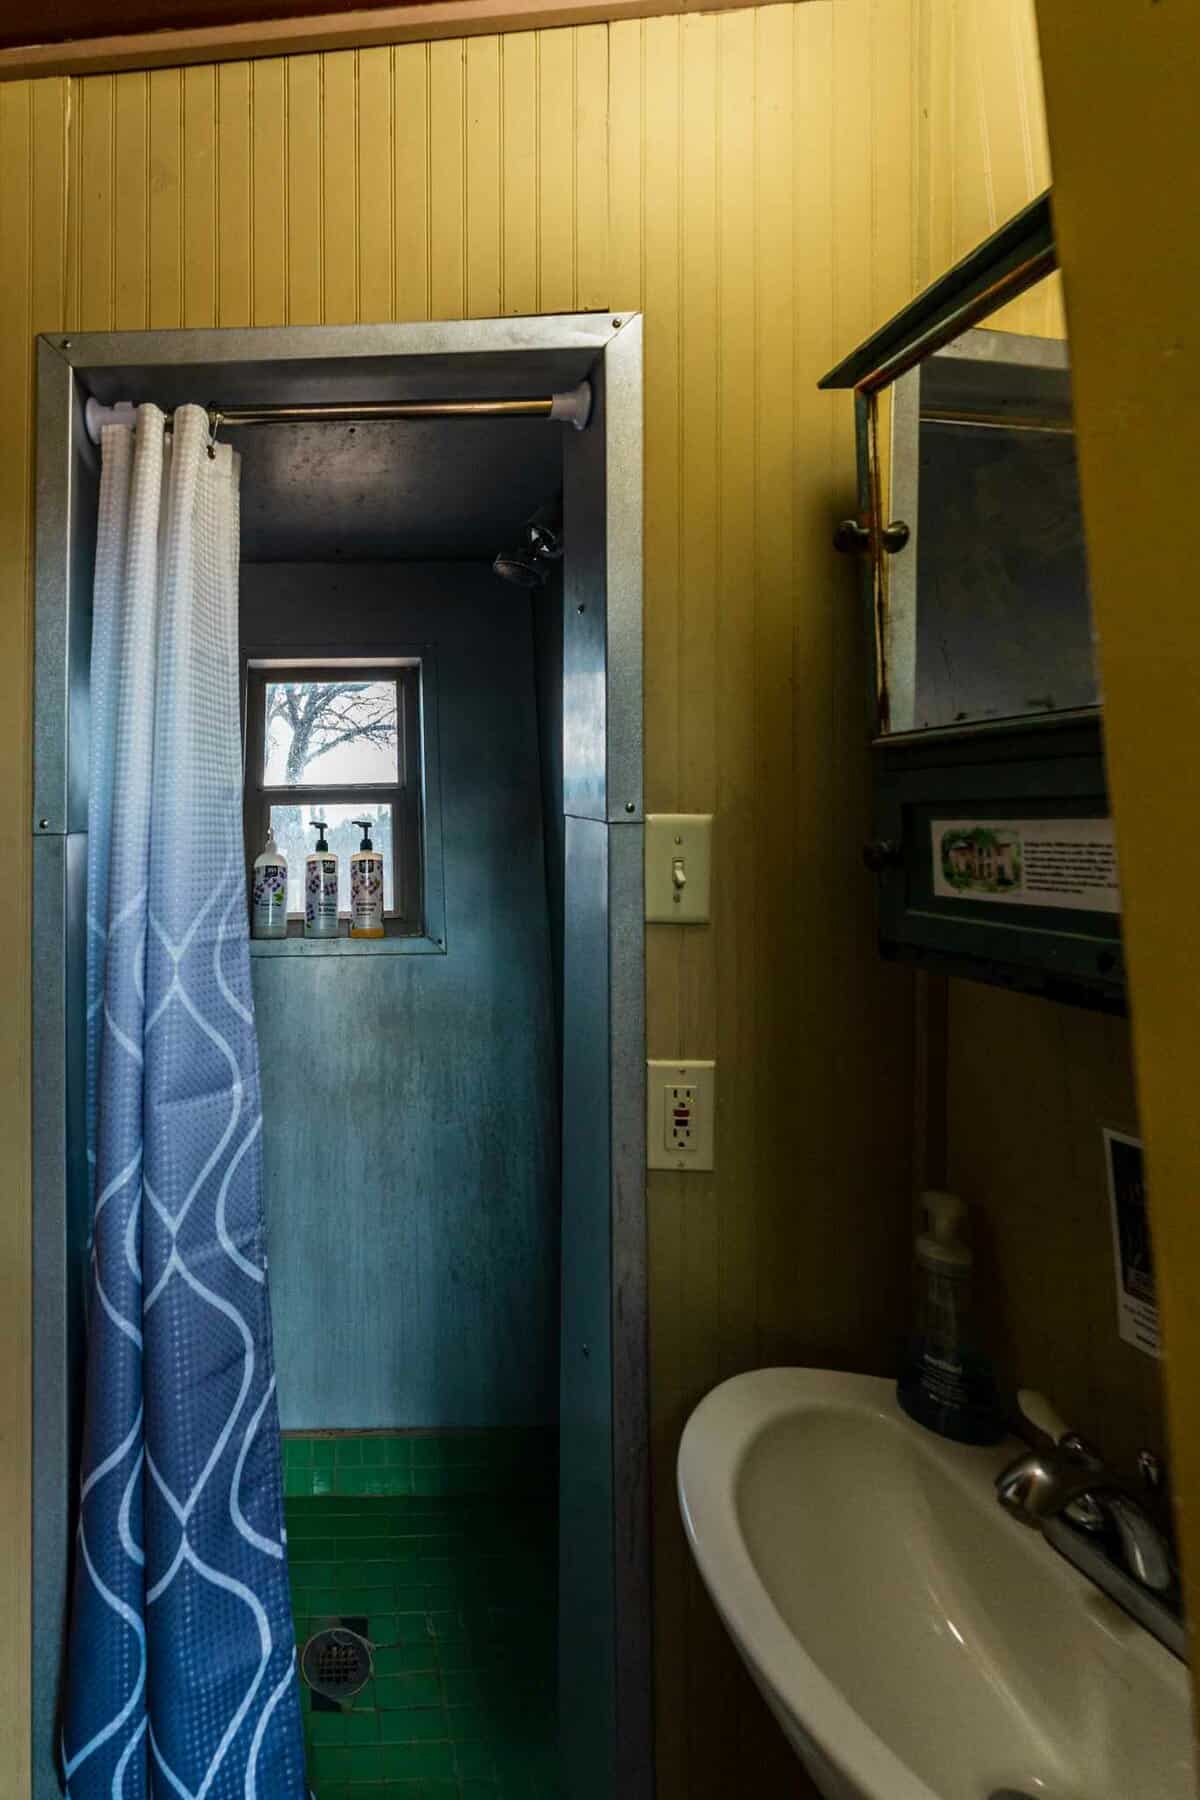 Bathroom inside the Cabin